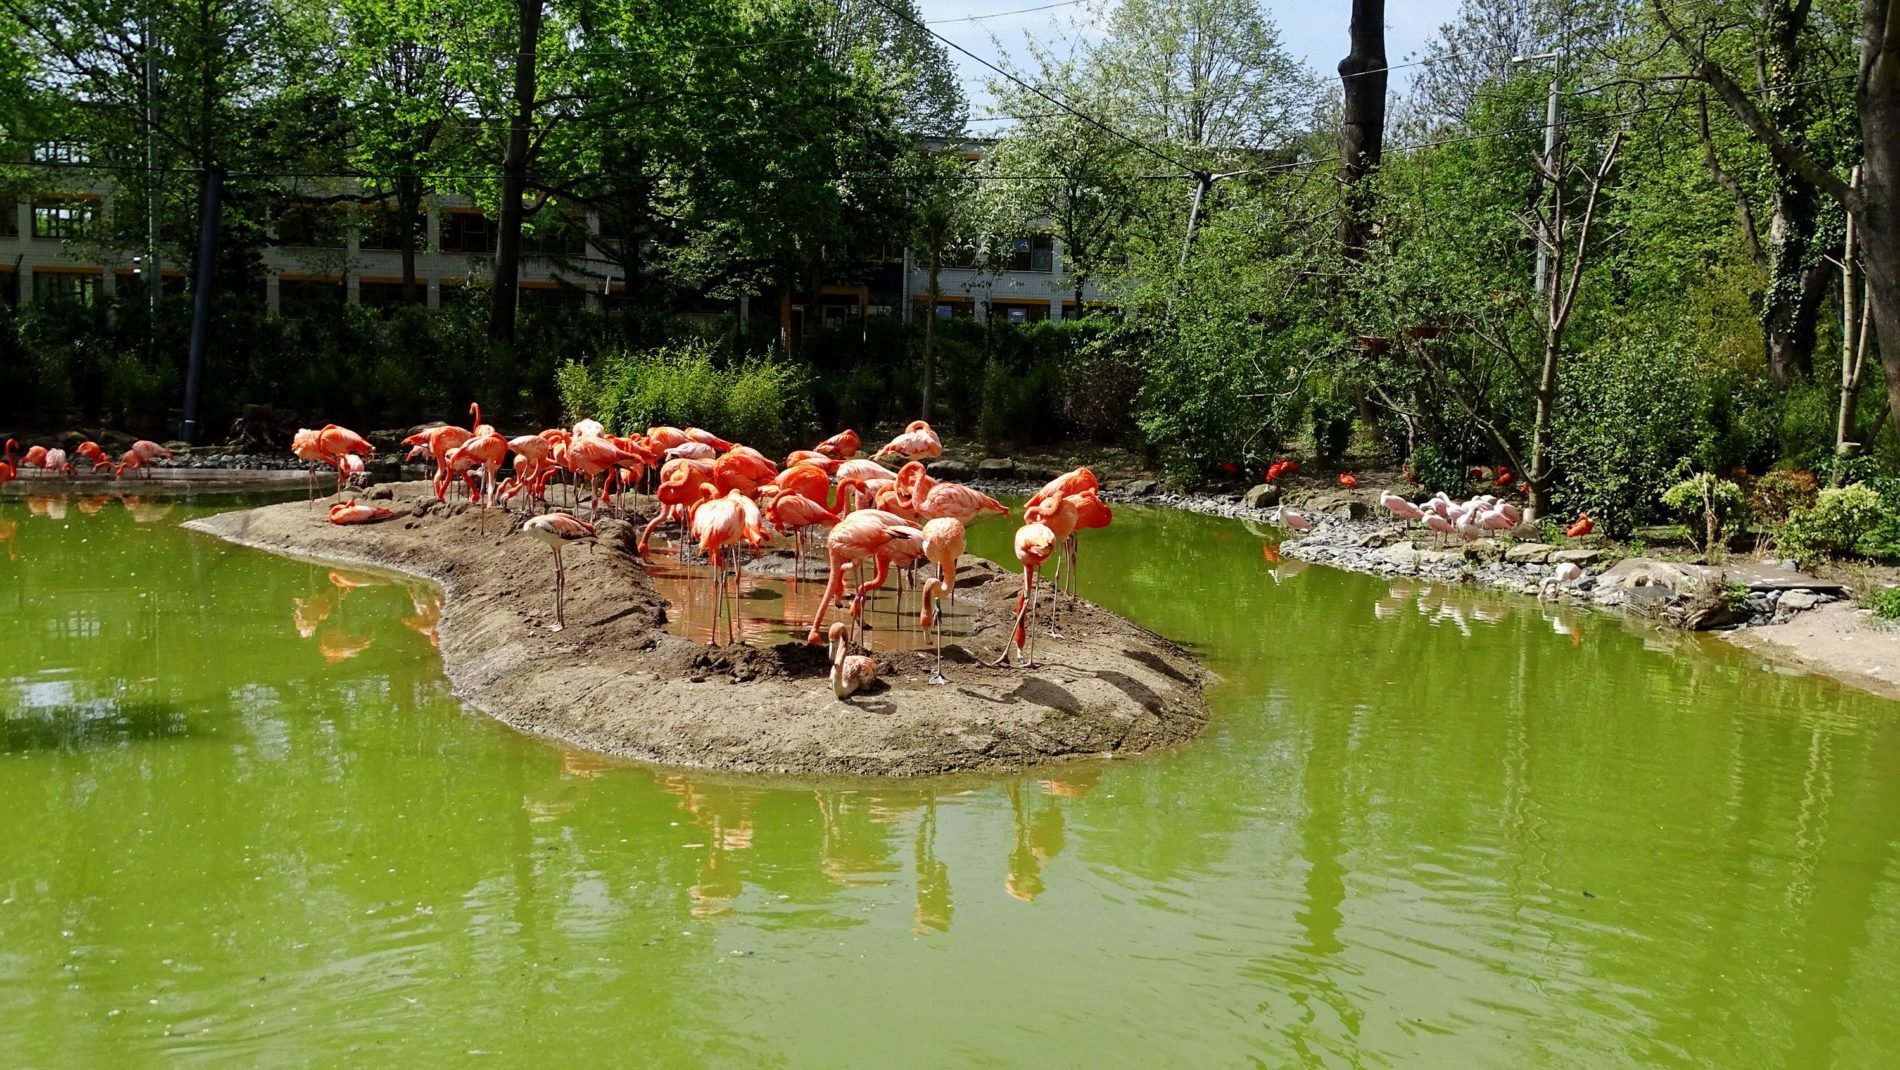 Flamingos on the breeding island.